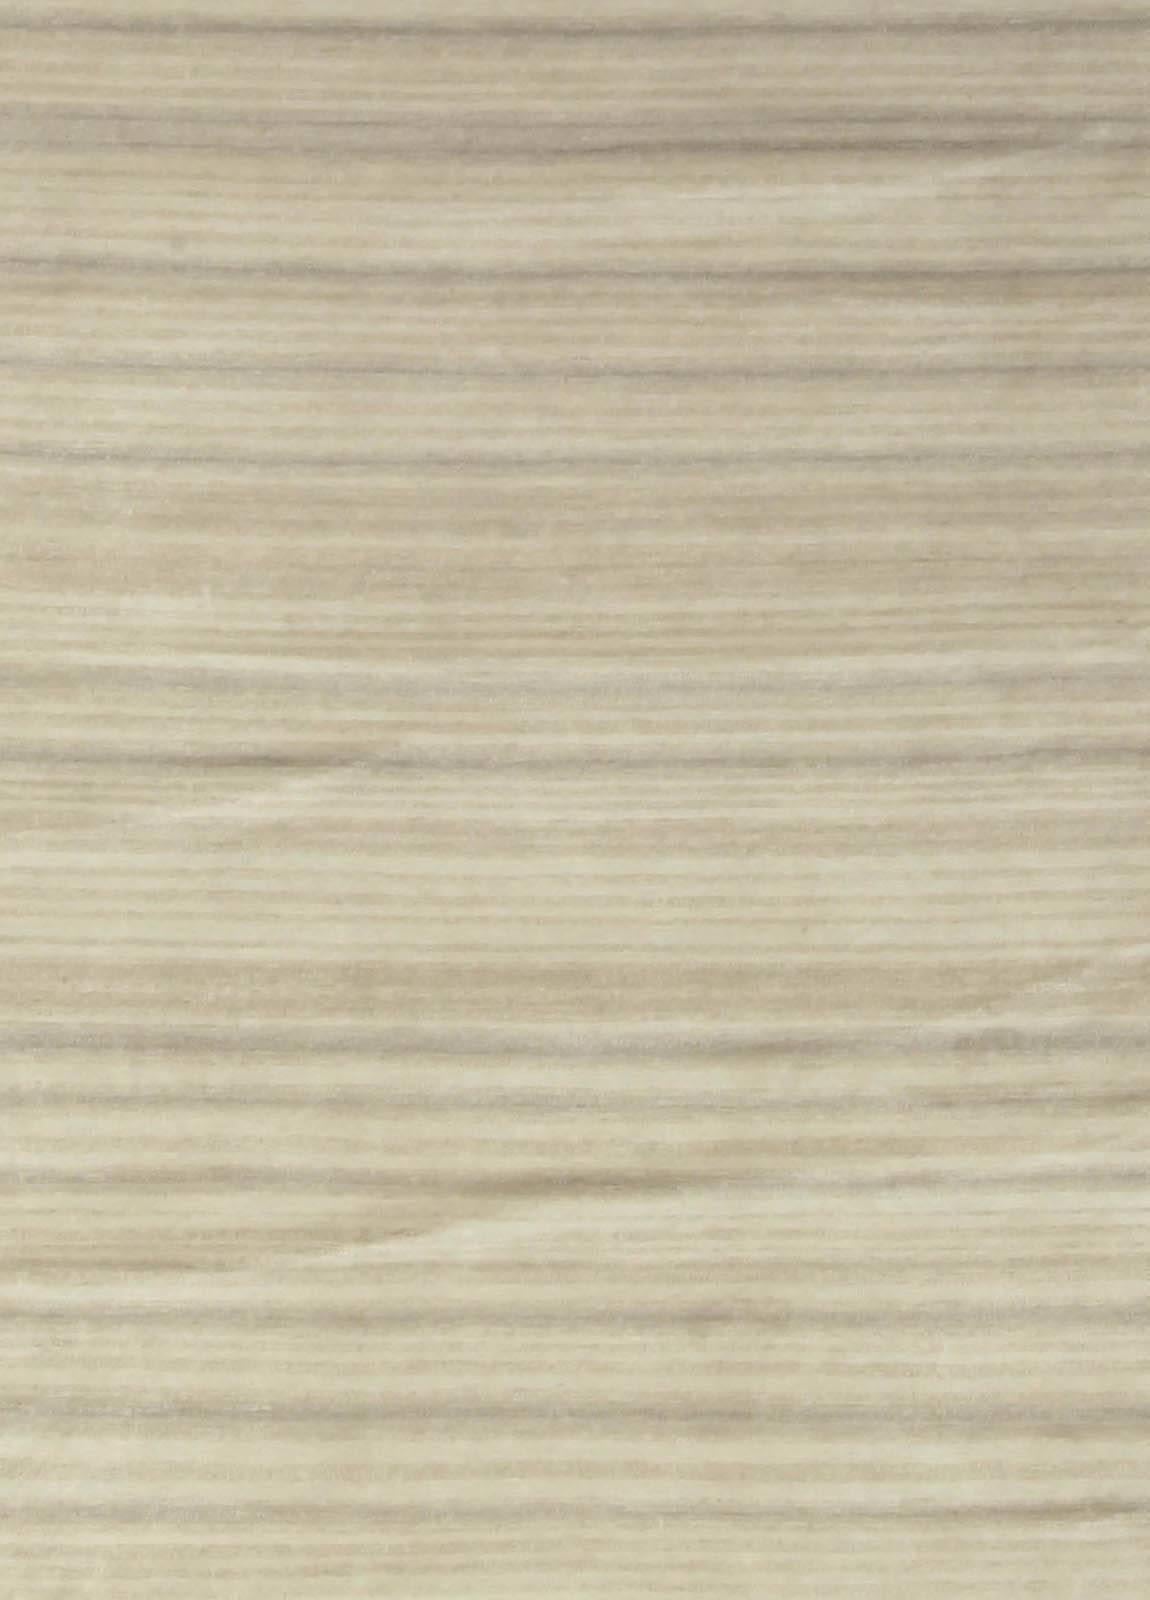 High-Quality Gazell striped brown rug by Doris Leslie Blau
Size: 13'0